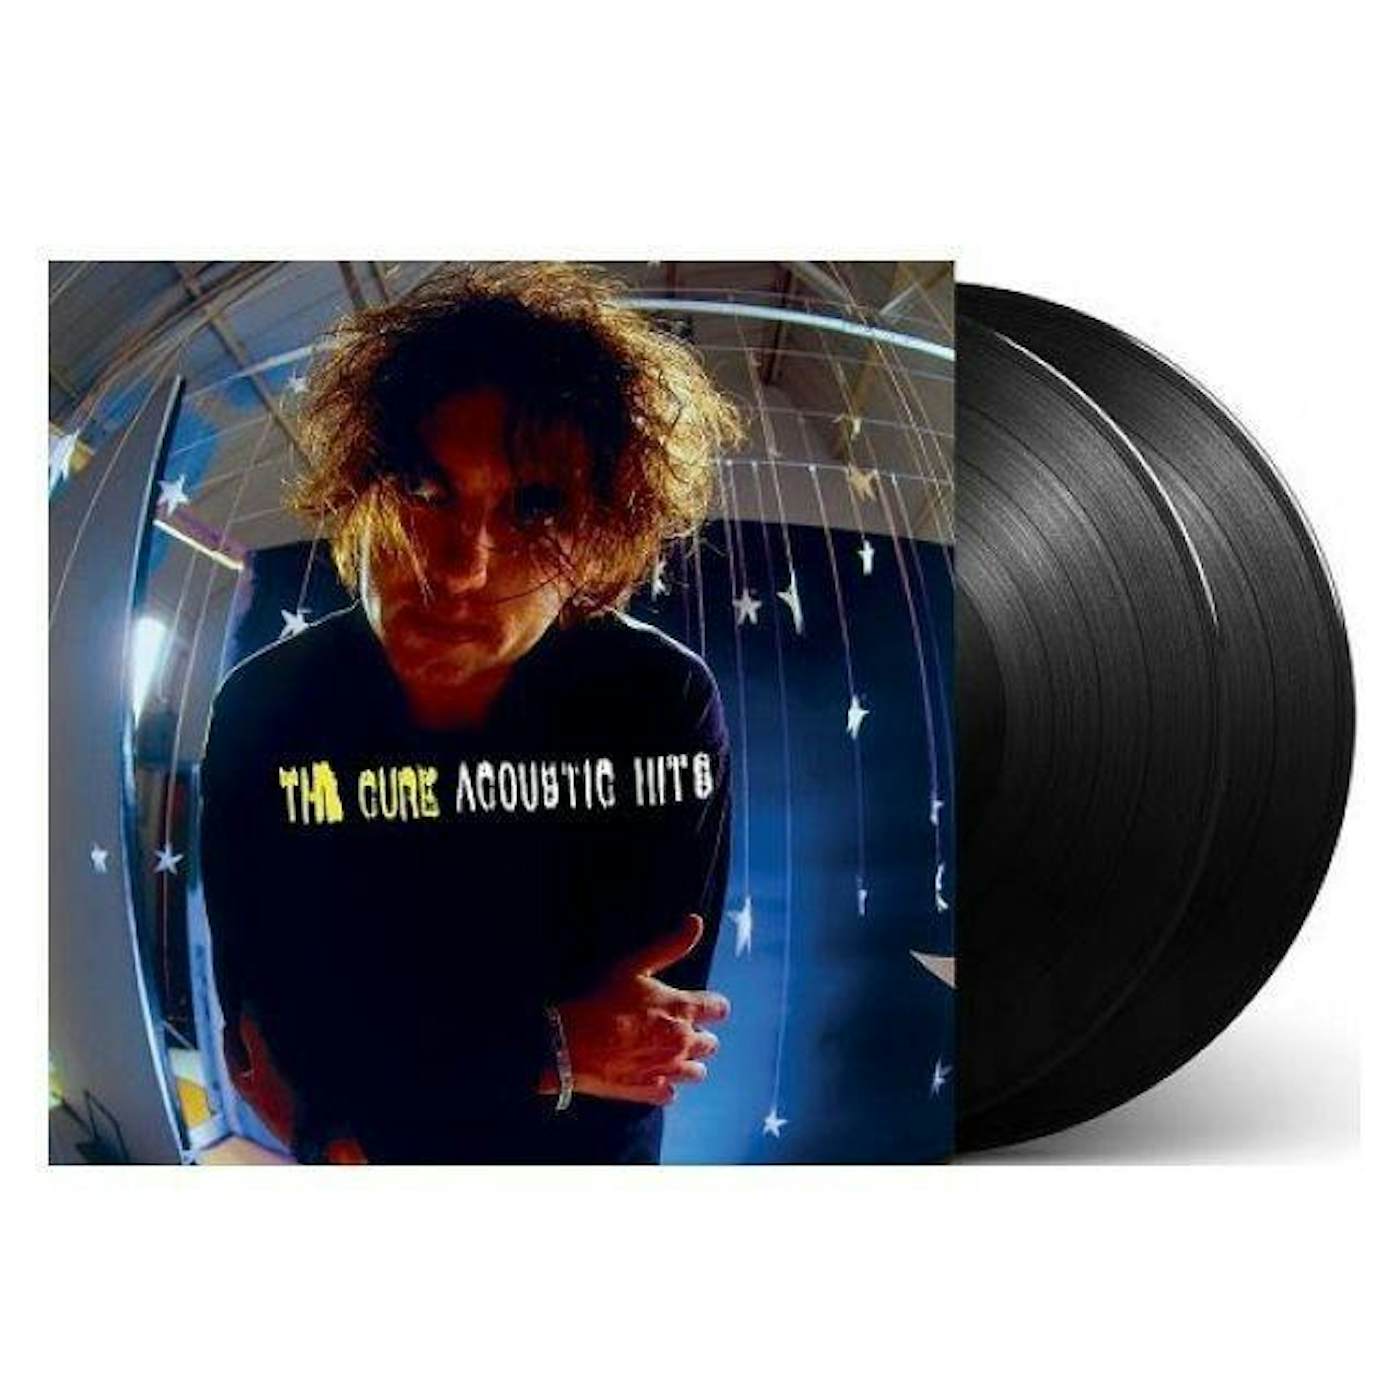 The Cure Acoustic Hits (2LP) Vinyl Record